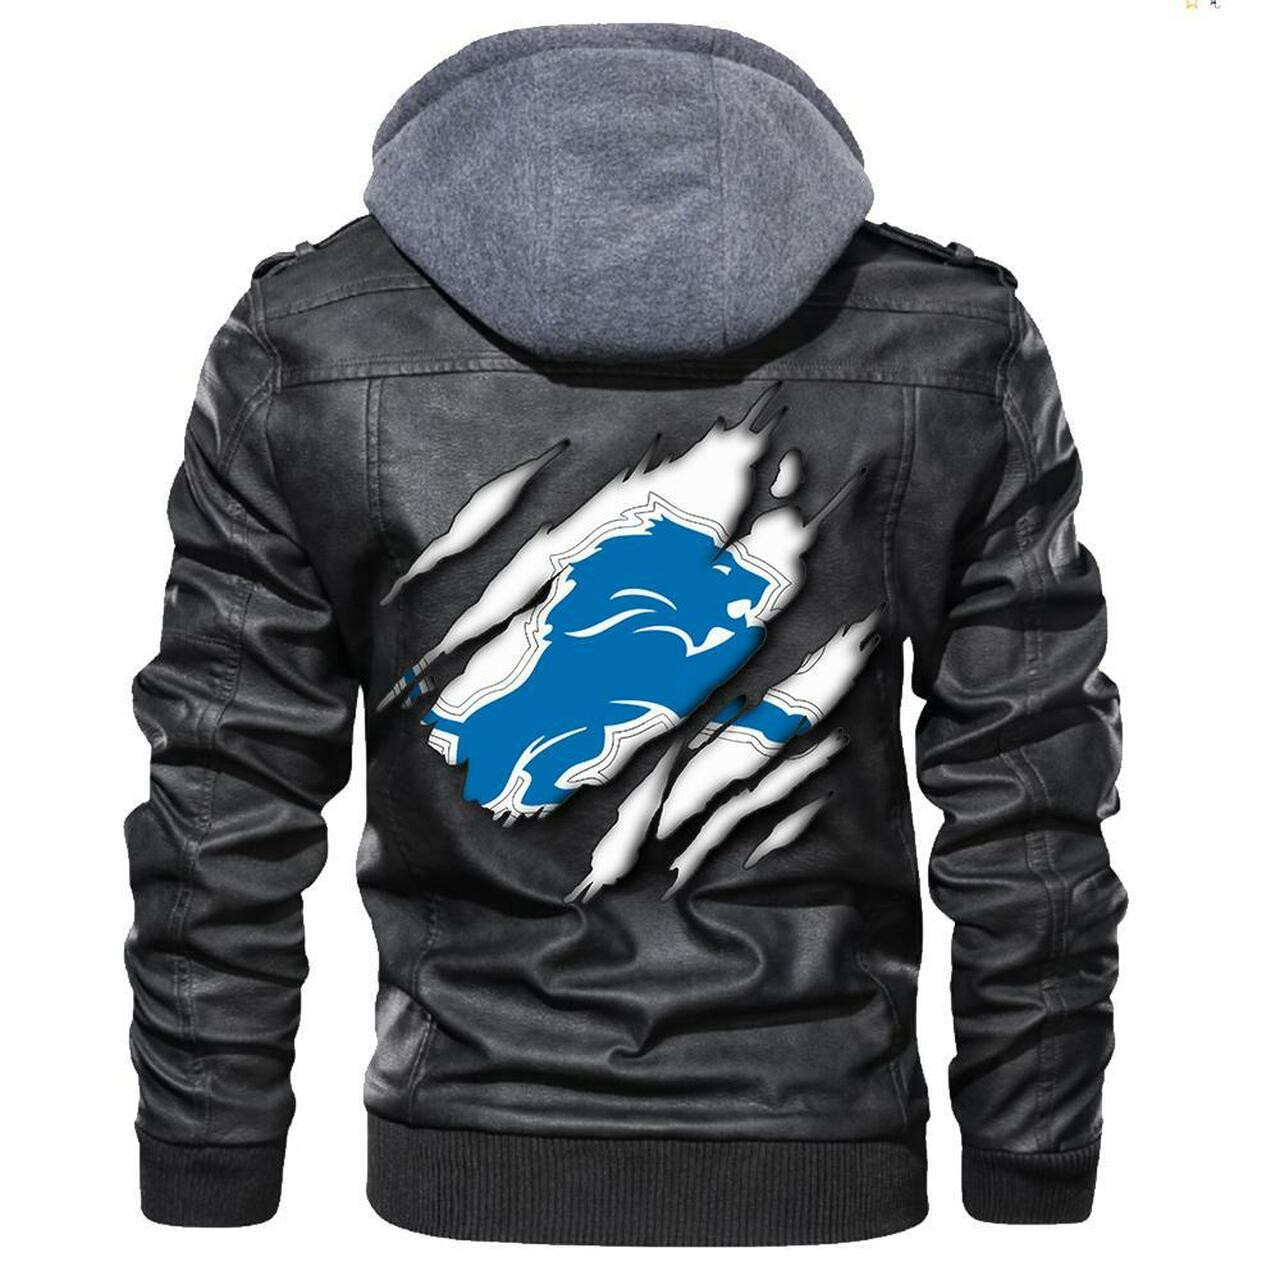 Top leather jacket Sells Best on Techcomshop 137